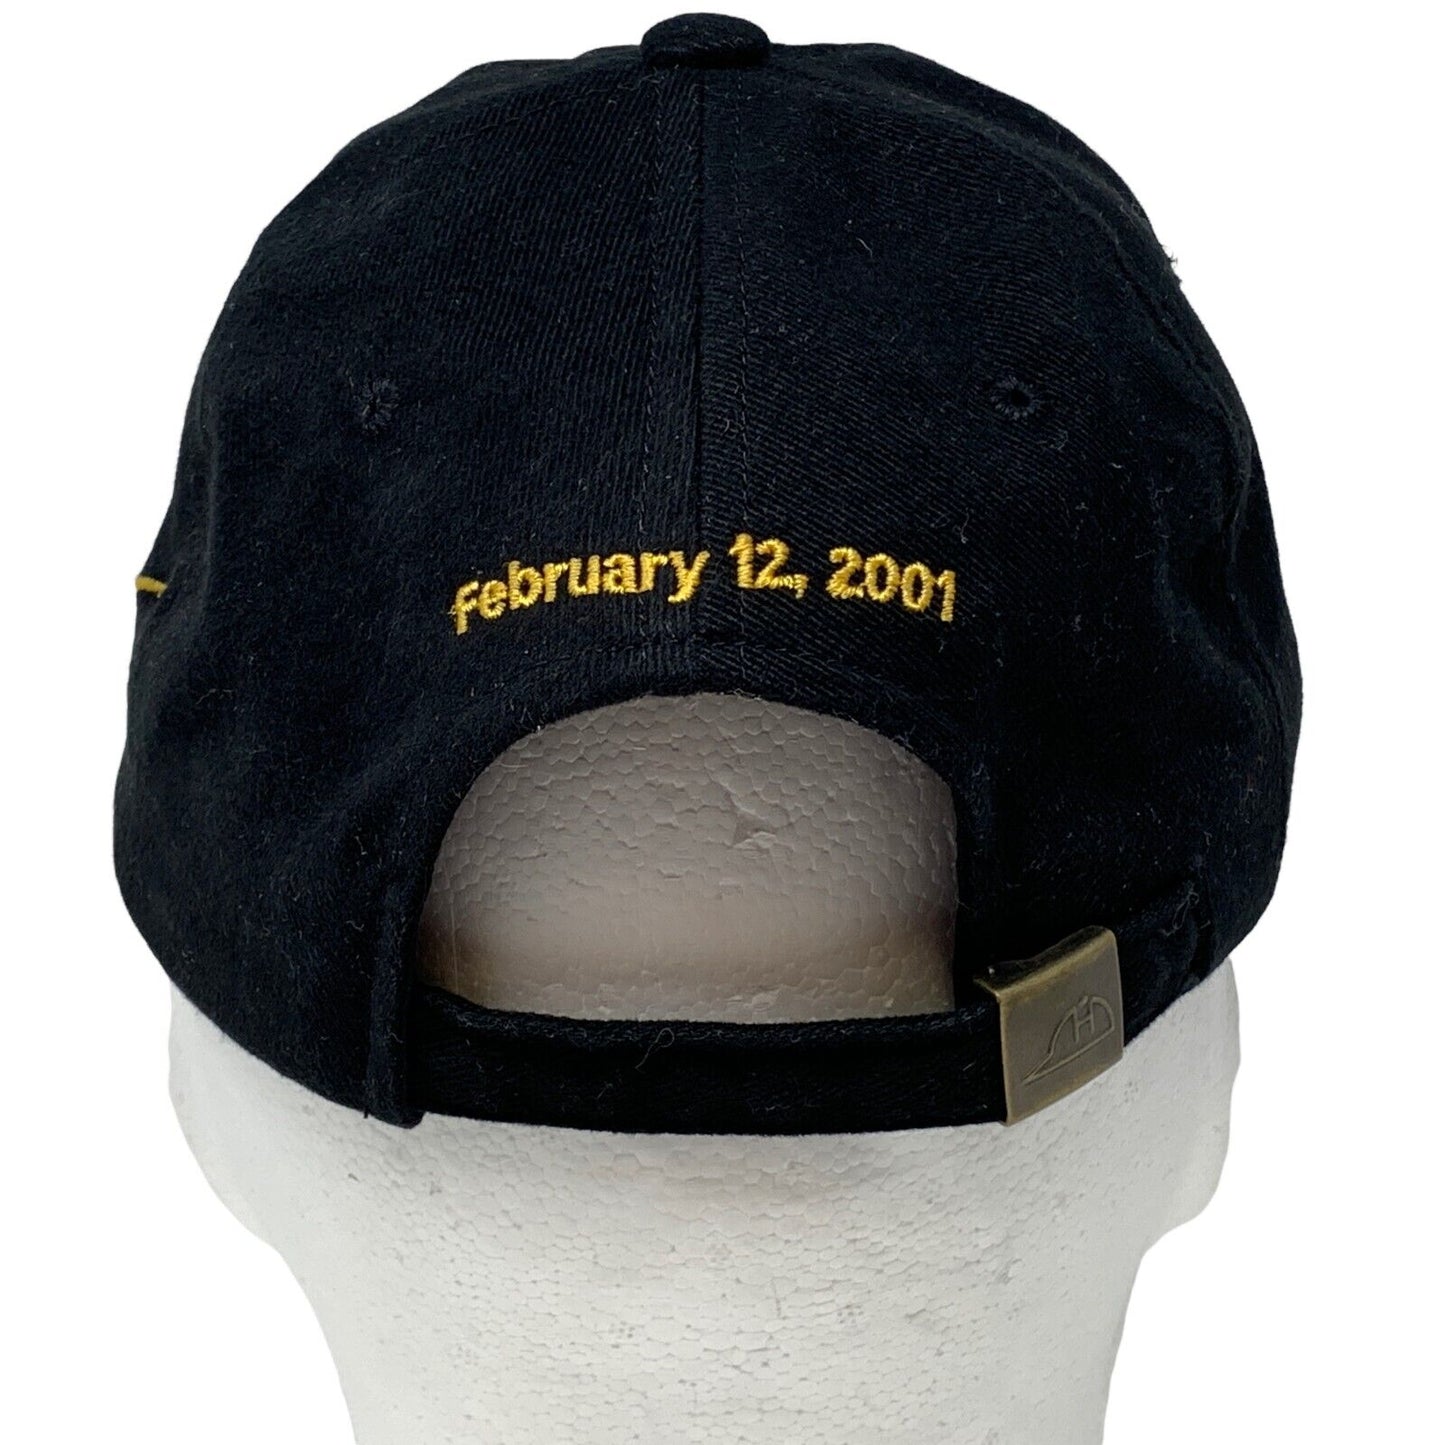 2001 The Espy Awards Strapback Hat Vintage Y2Ks ESPN Sports 6 Panel Baseball Cap